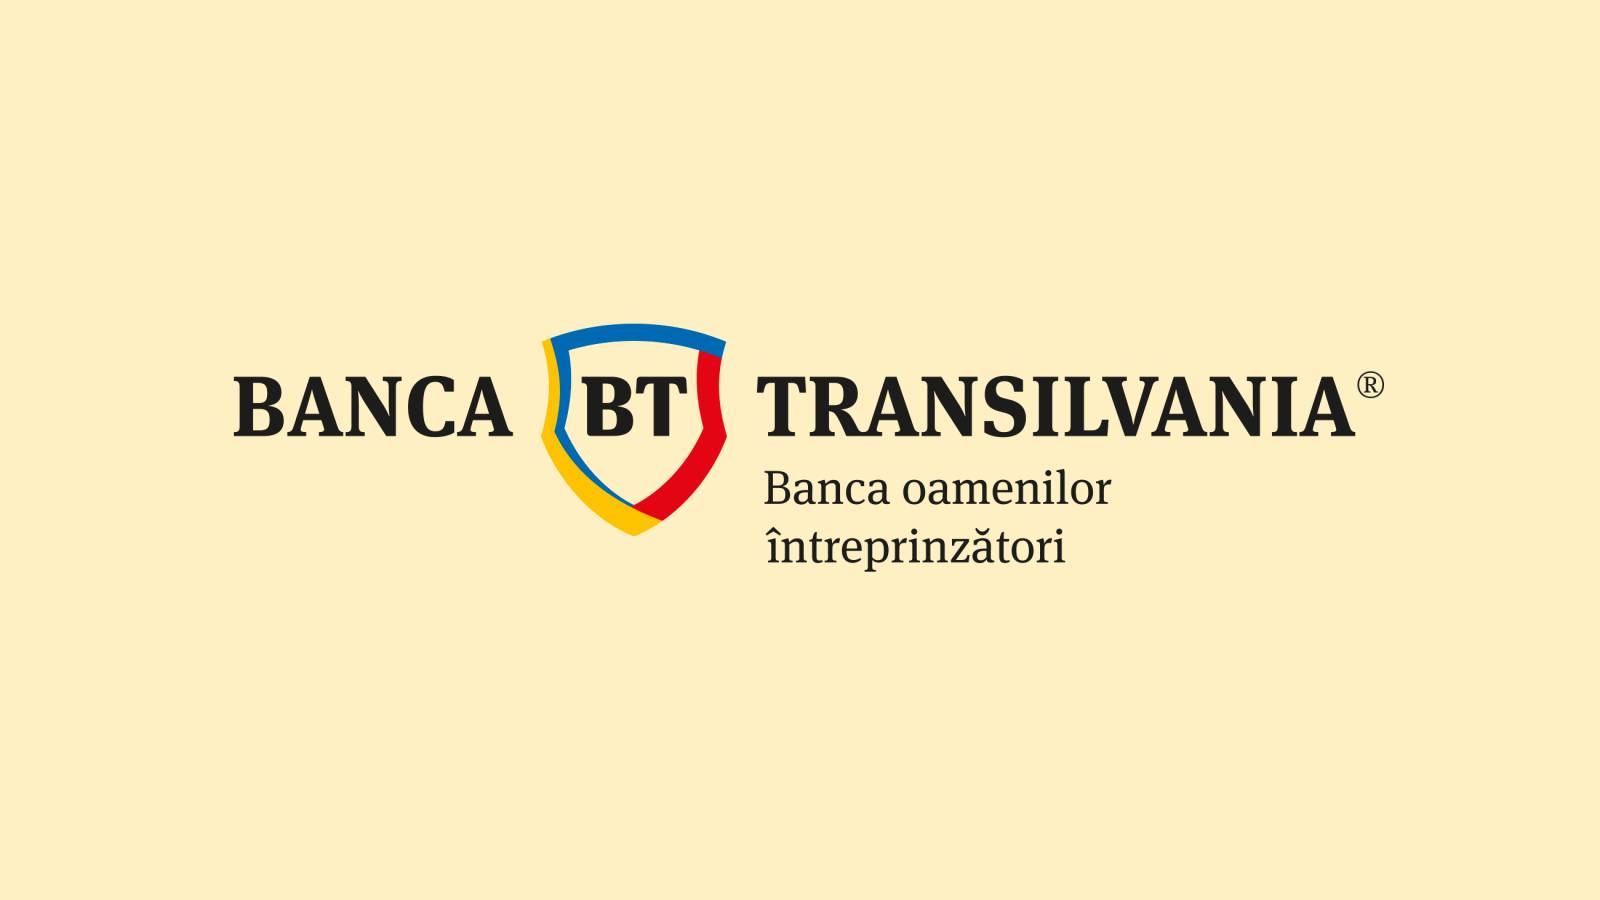 BANCA Transilvania Hotarare OFICIALA Anuntata GRATUIT Clientilor